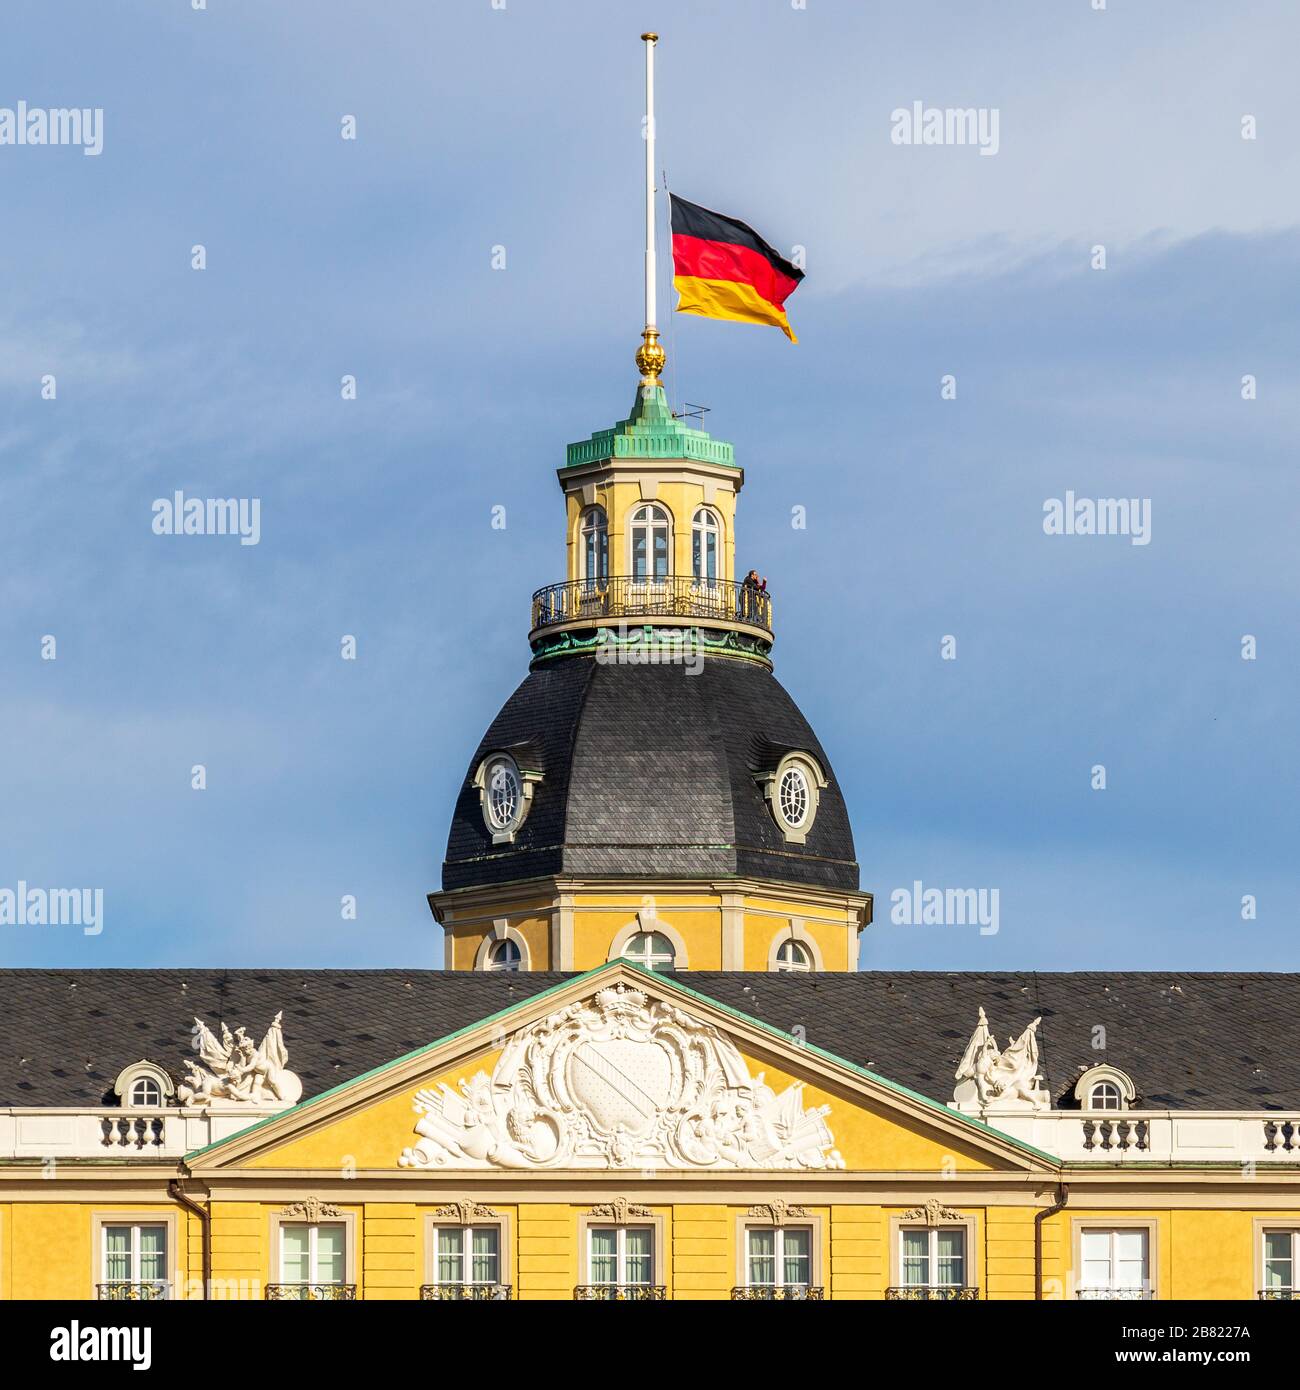 Bandiera tedesca a Halfmast, auf Halbmast, sulla cima del Castello di Karlsruhe. A Karlsruhe, Baden-Württemberg, Germania Foto Stock